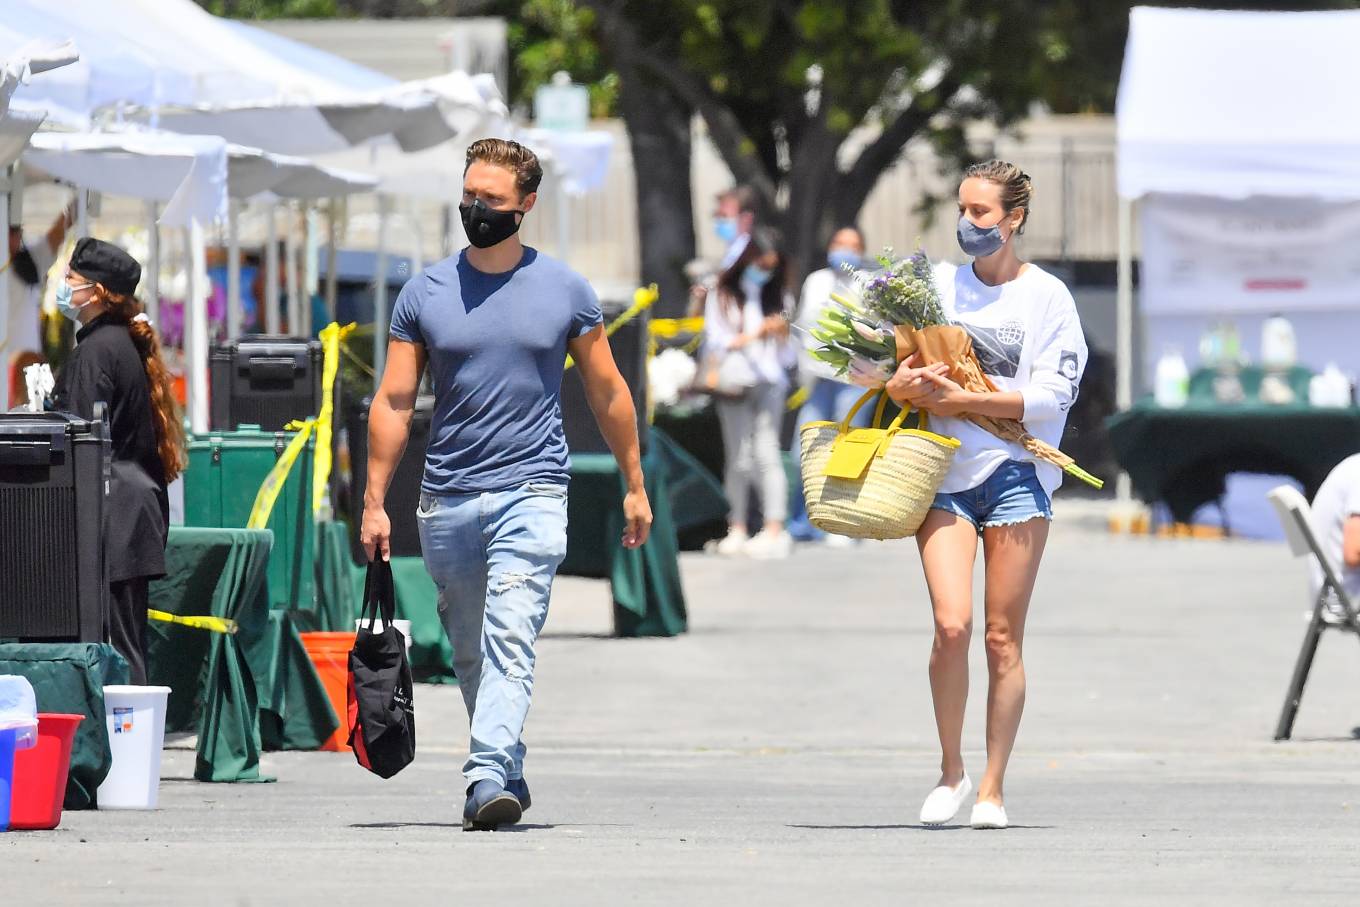 Brie Larson in Denim Shorts â€“ Shopping for flowers at a farmerâ€™s market in Malibu